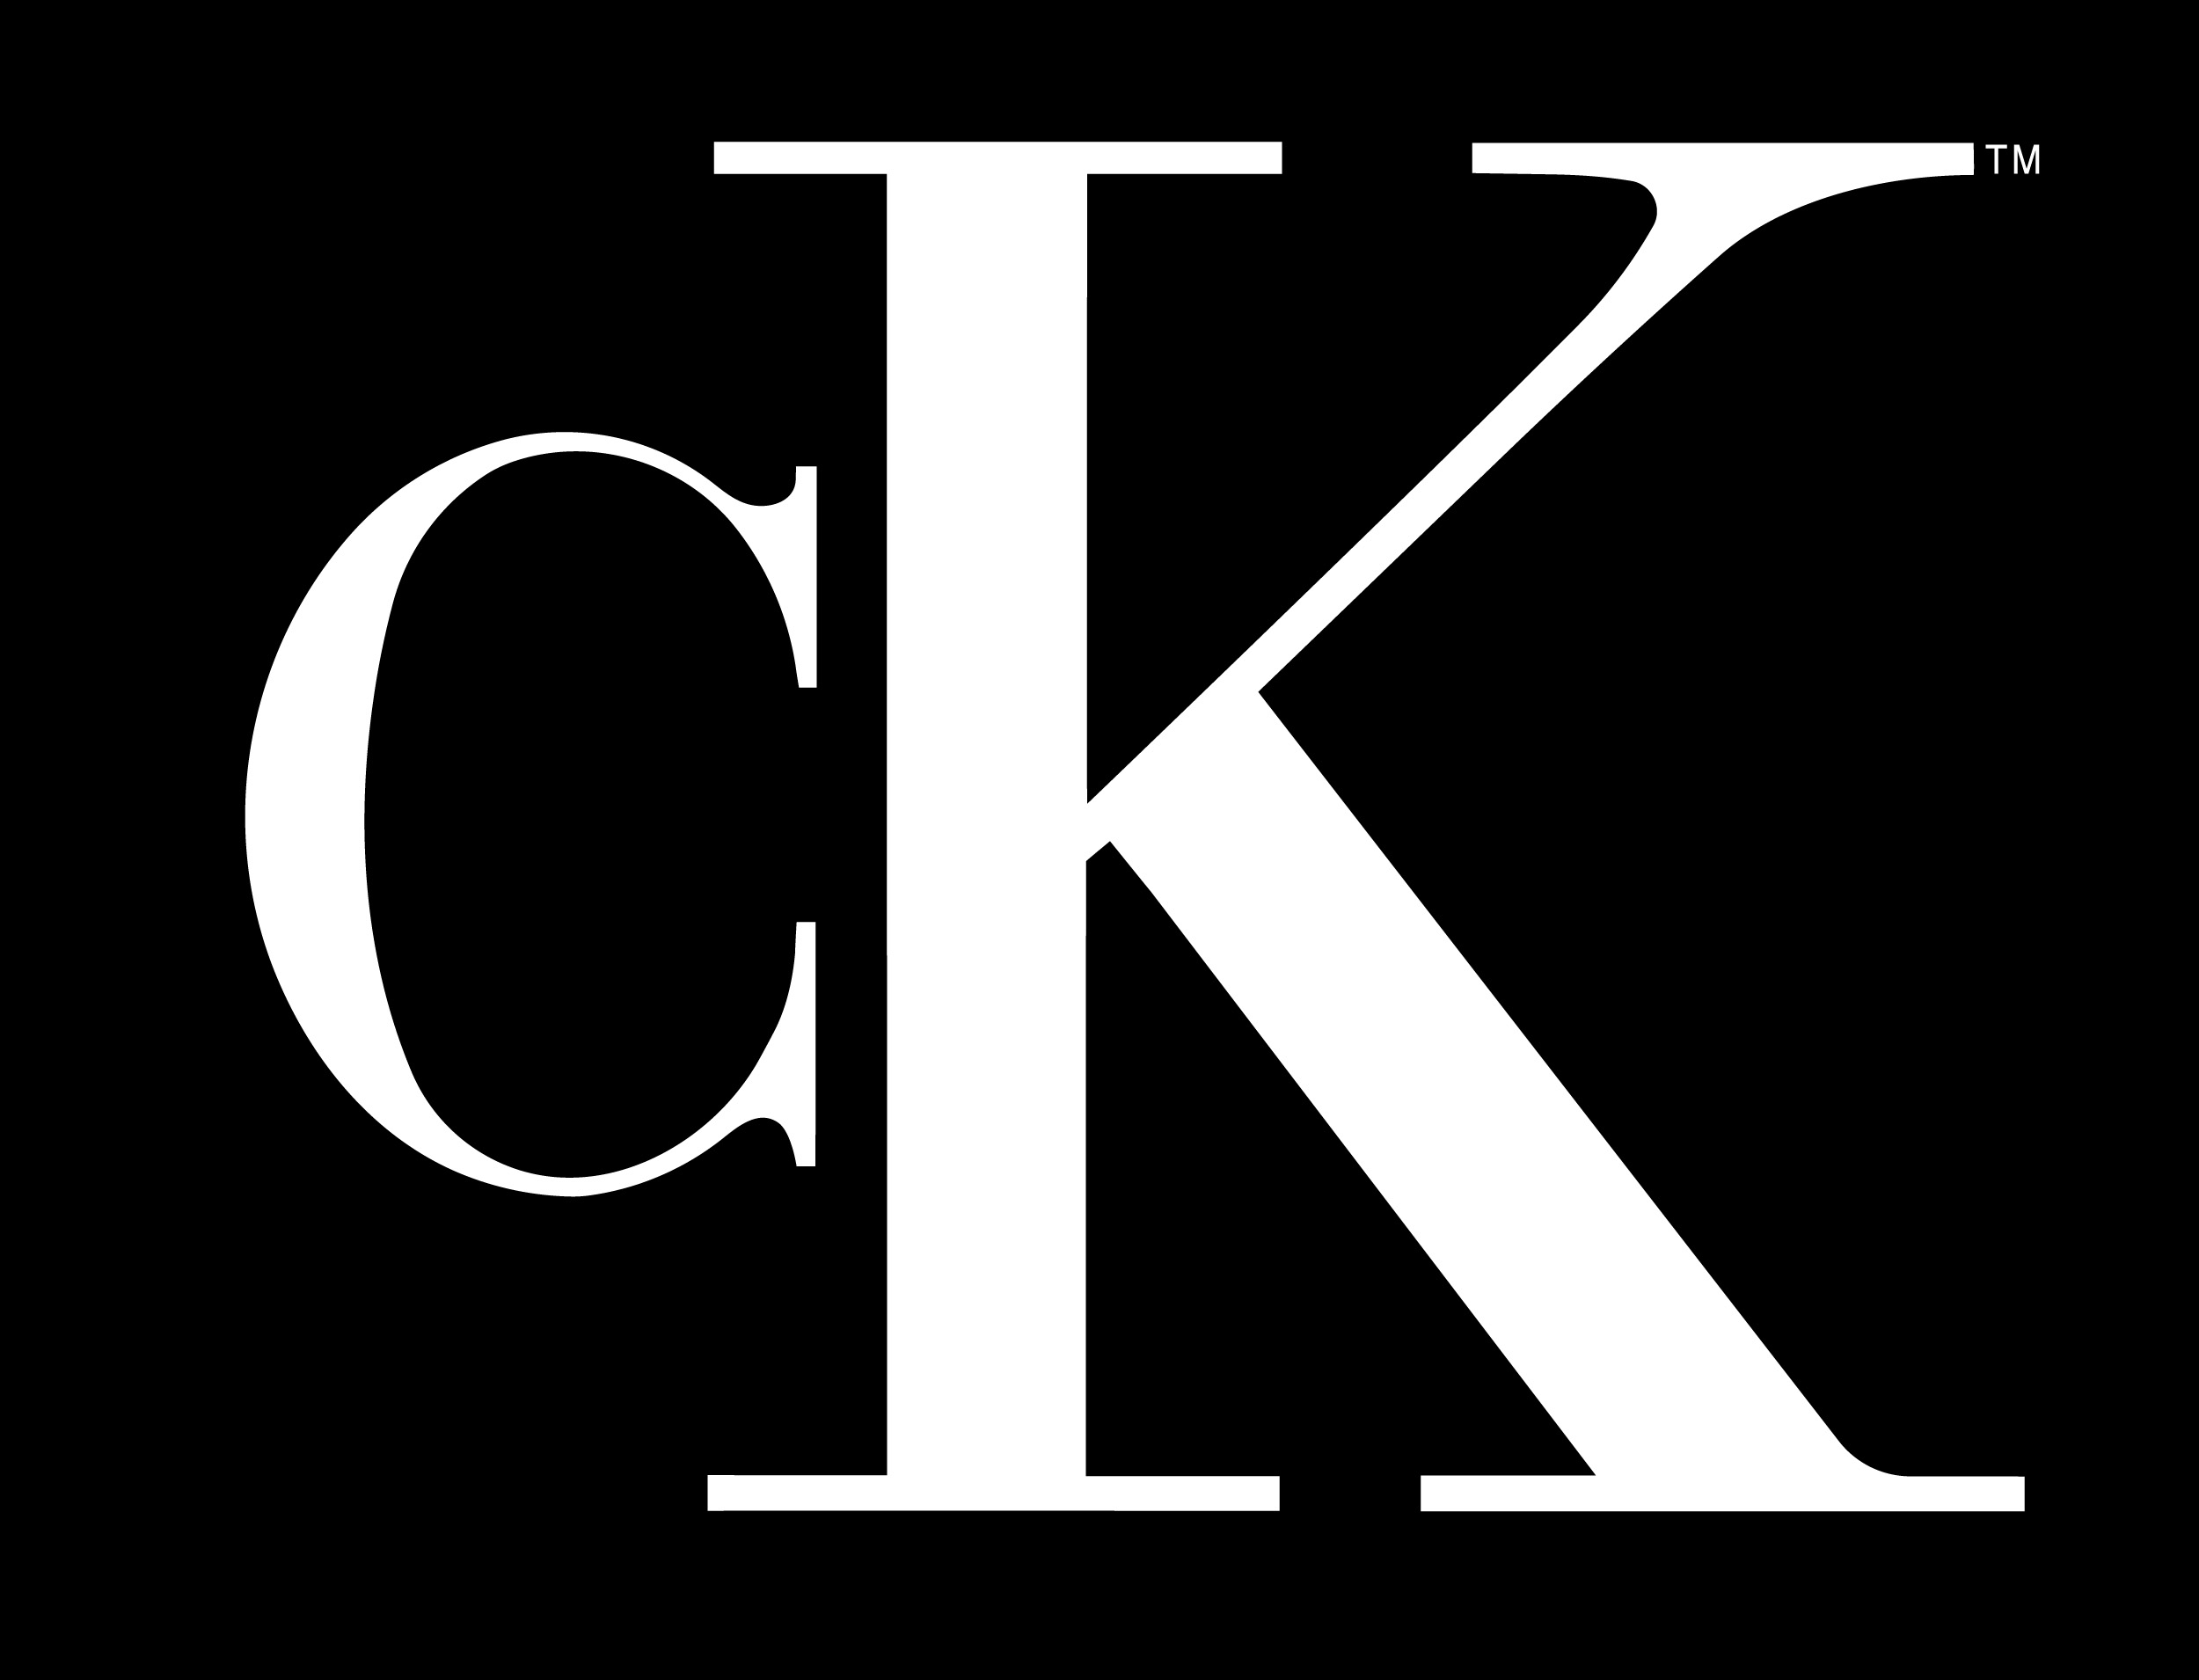 ck logo